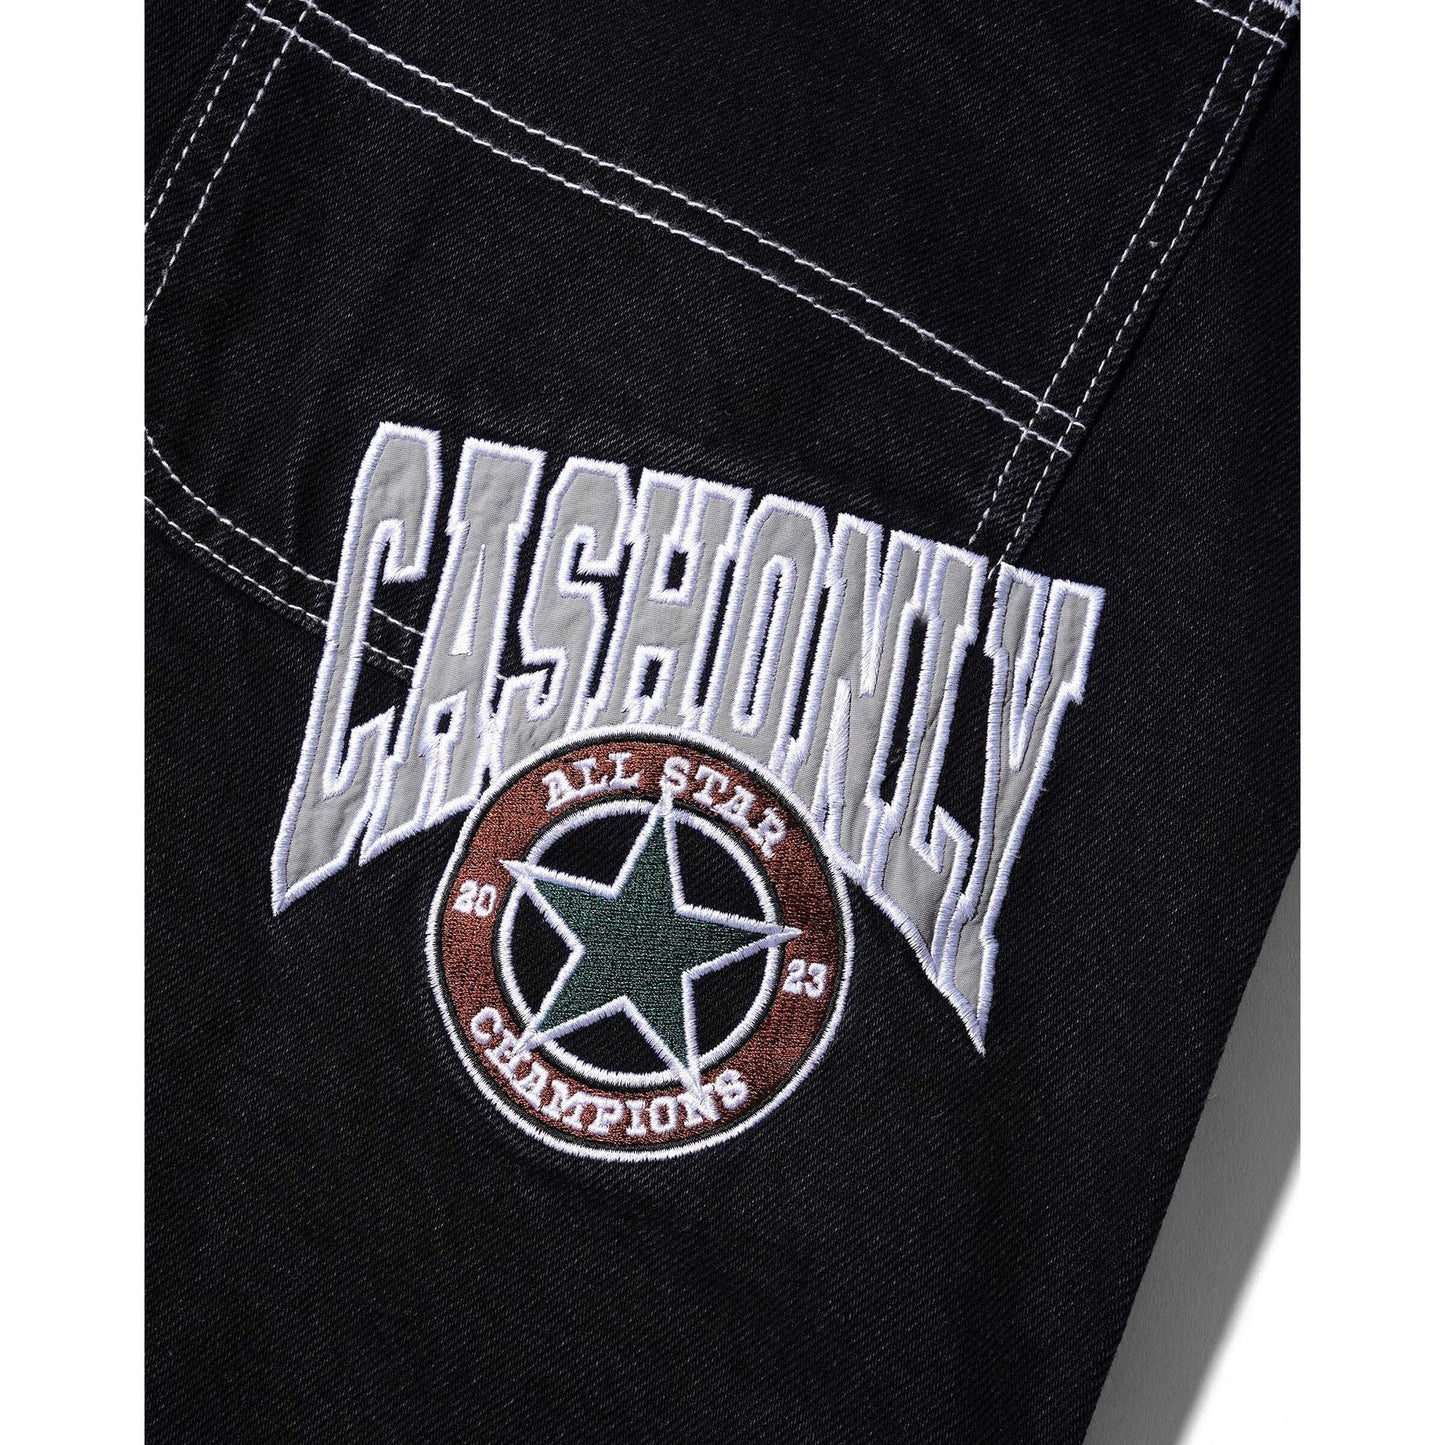 Cash Only All Star Baggy Denim Jeans, black - Tiki Room Skateboards - 2